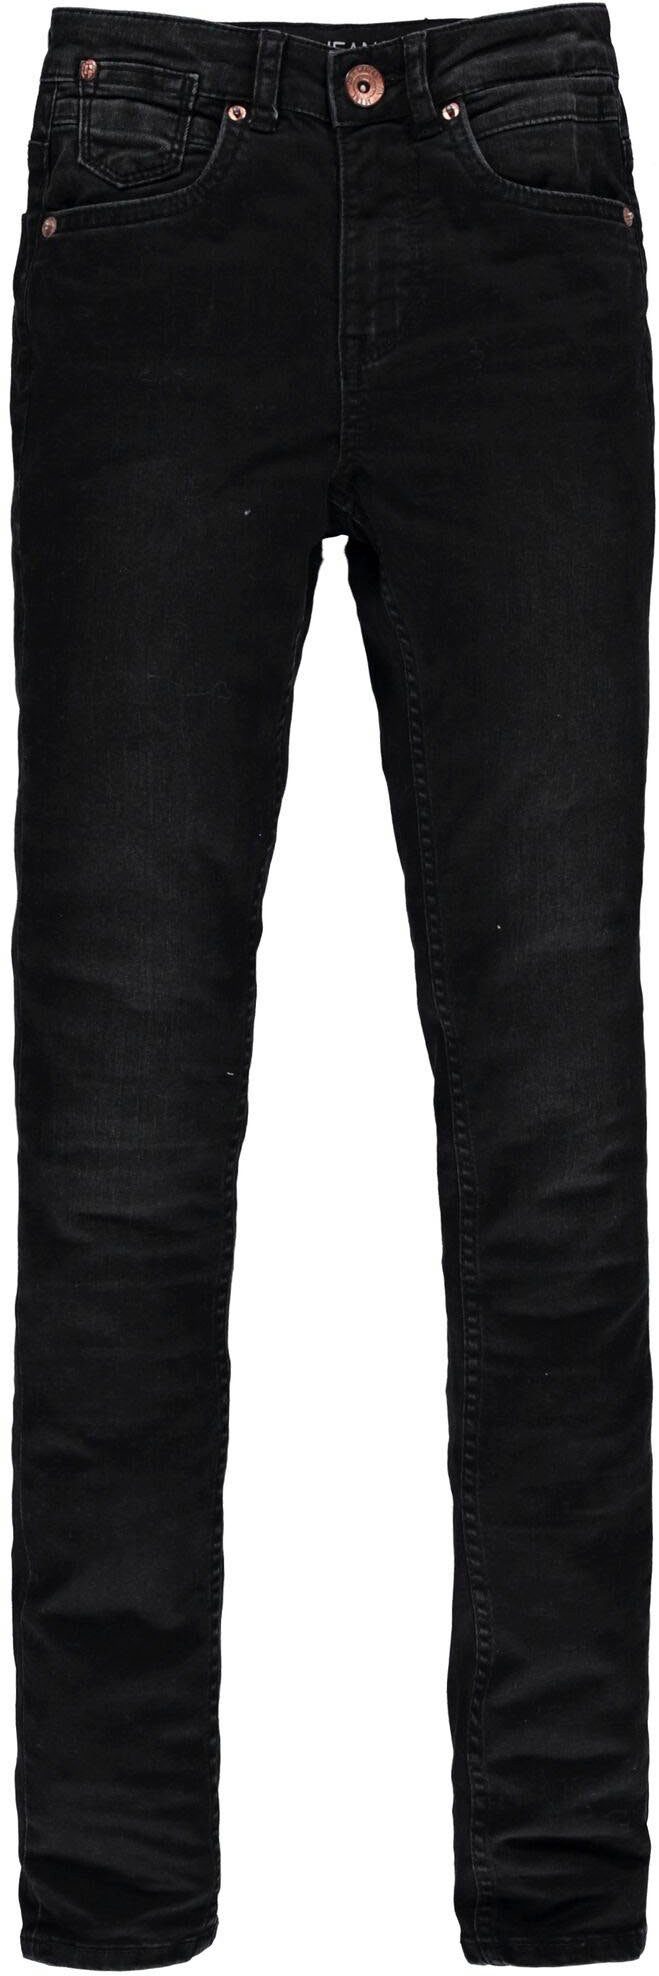 Garcia Stretch-Jeans 570 SUPERSLIM RIANNA